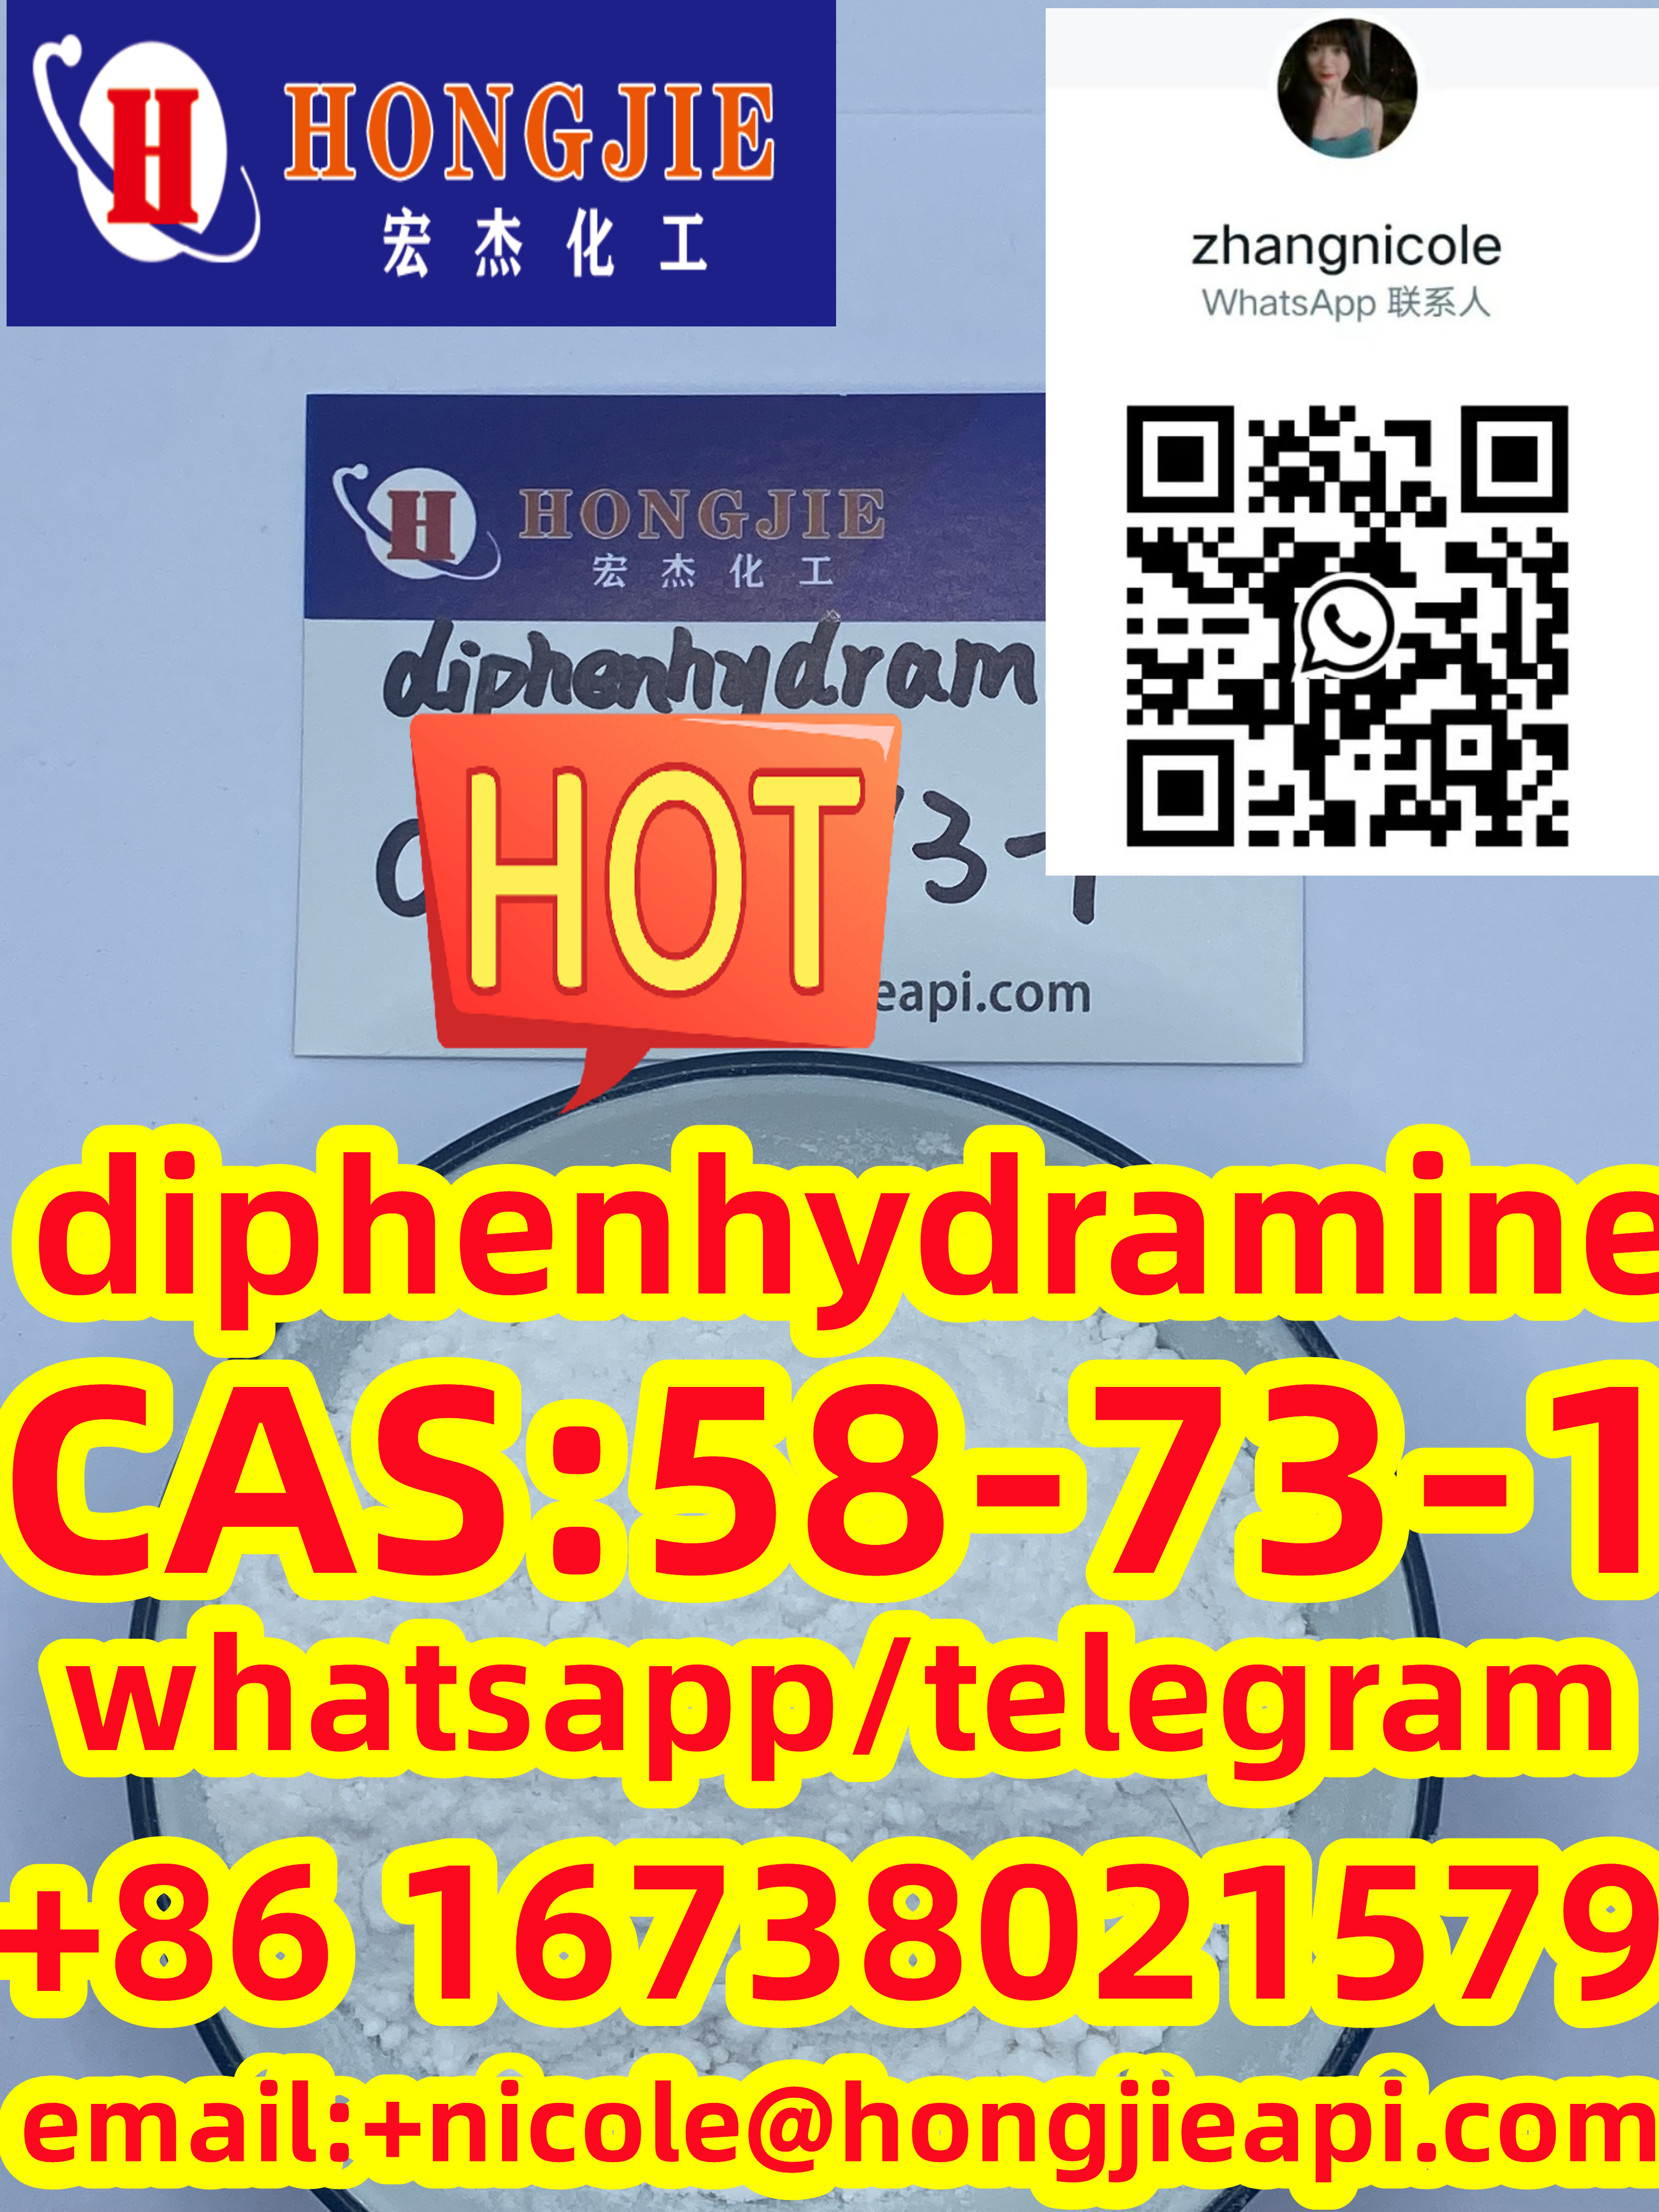 Diphenhydramine CAS:58-73-1